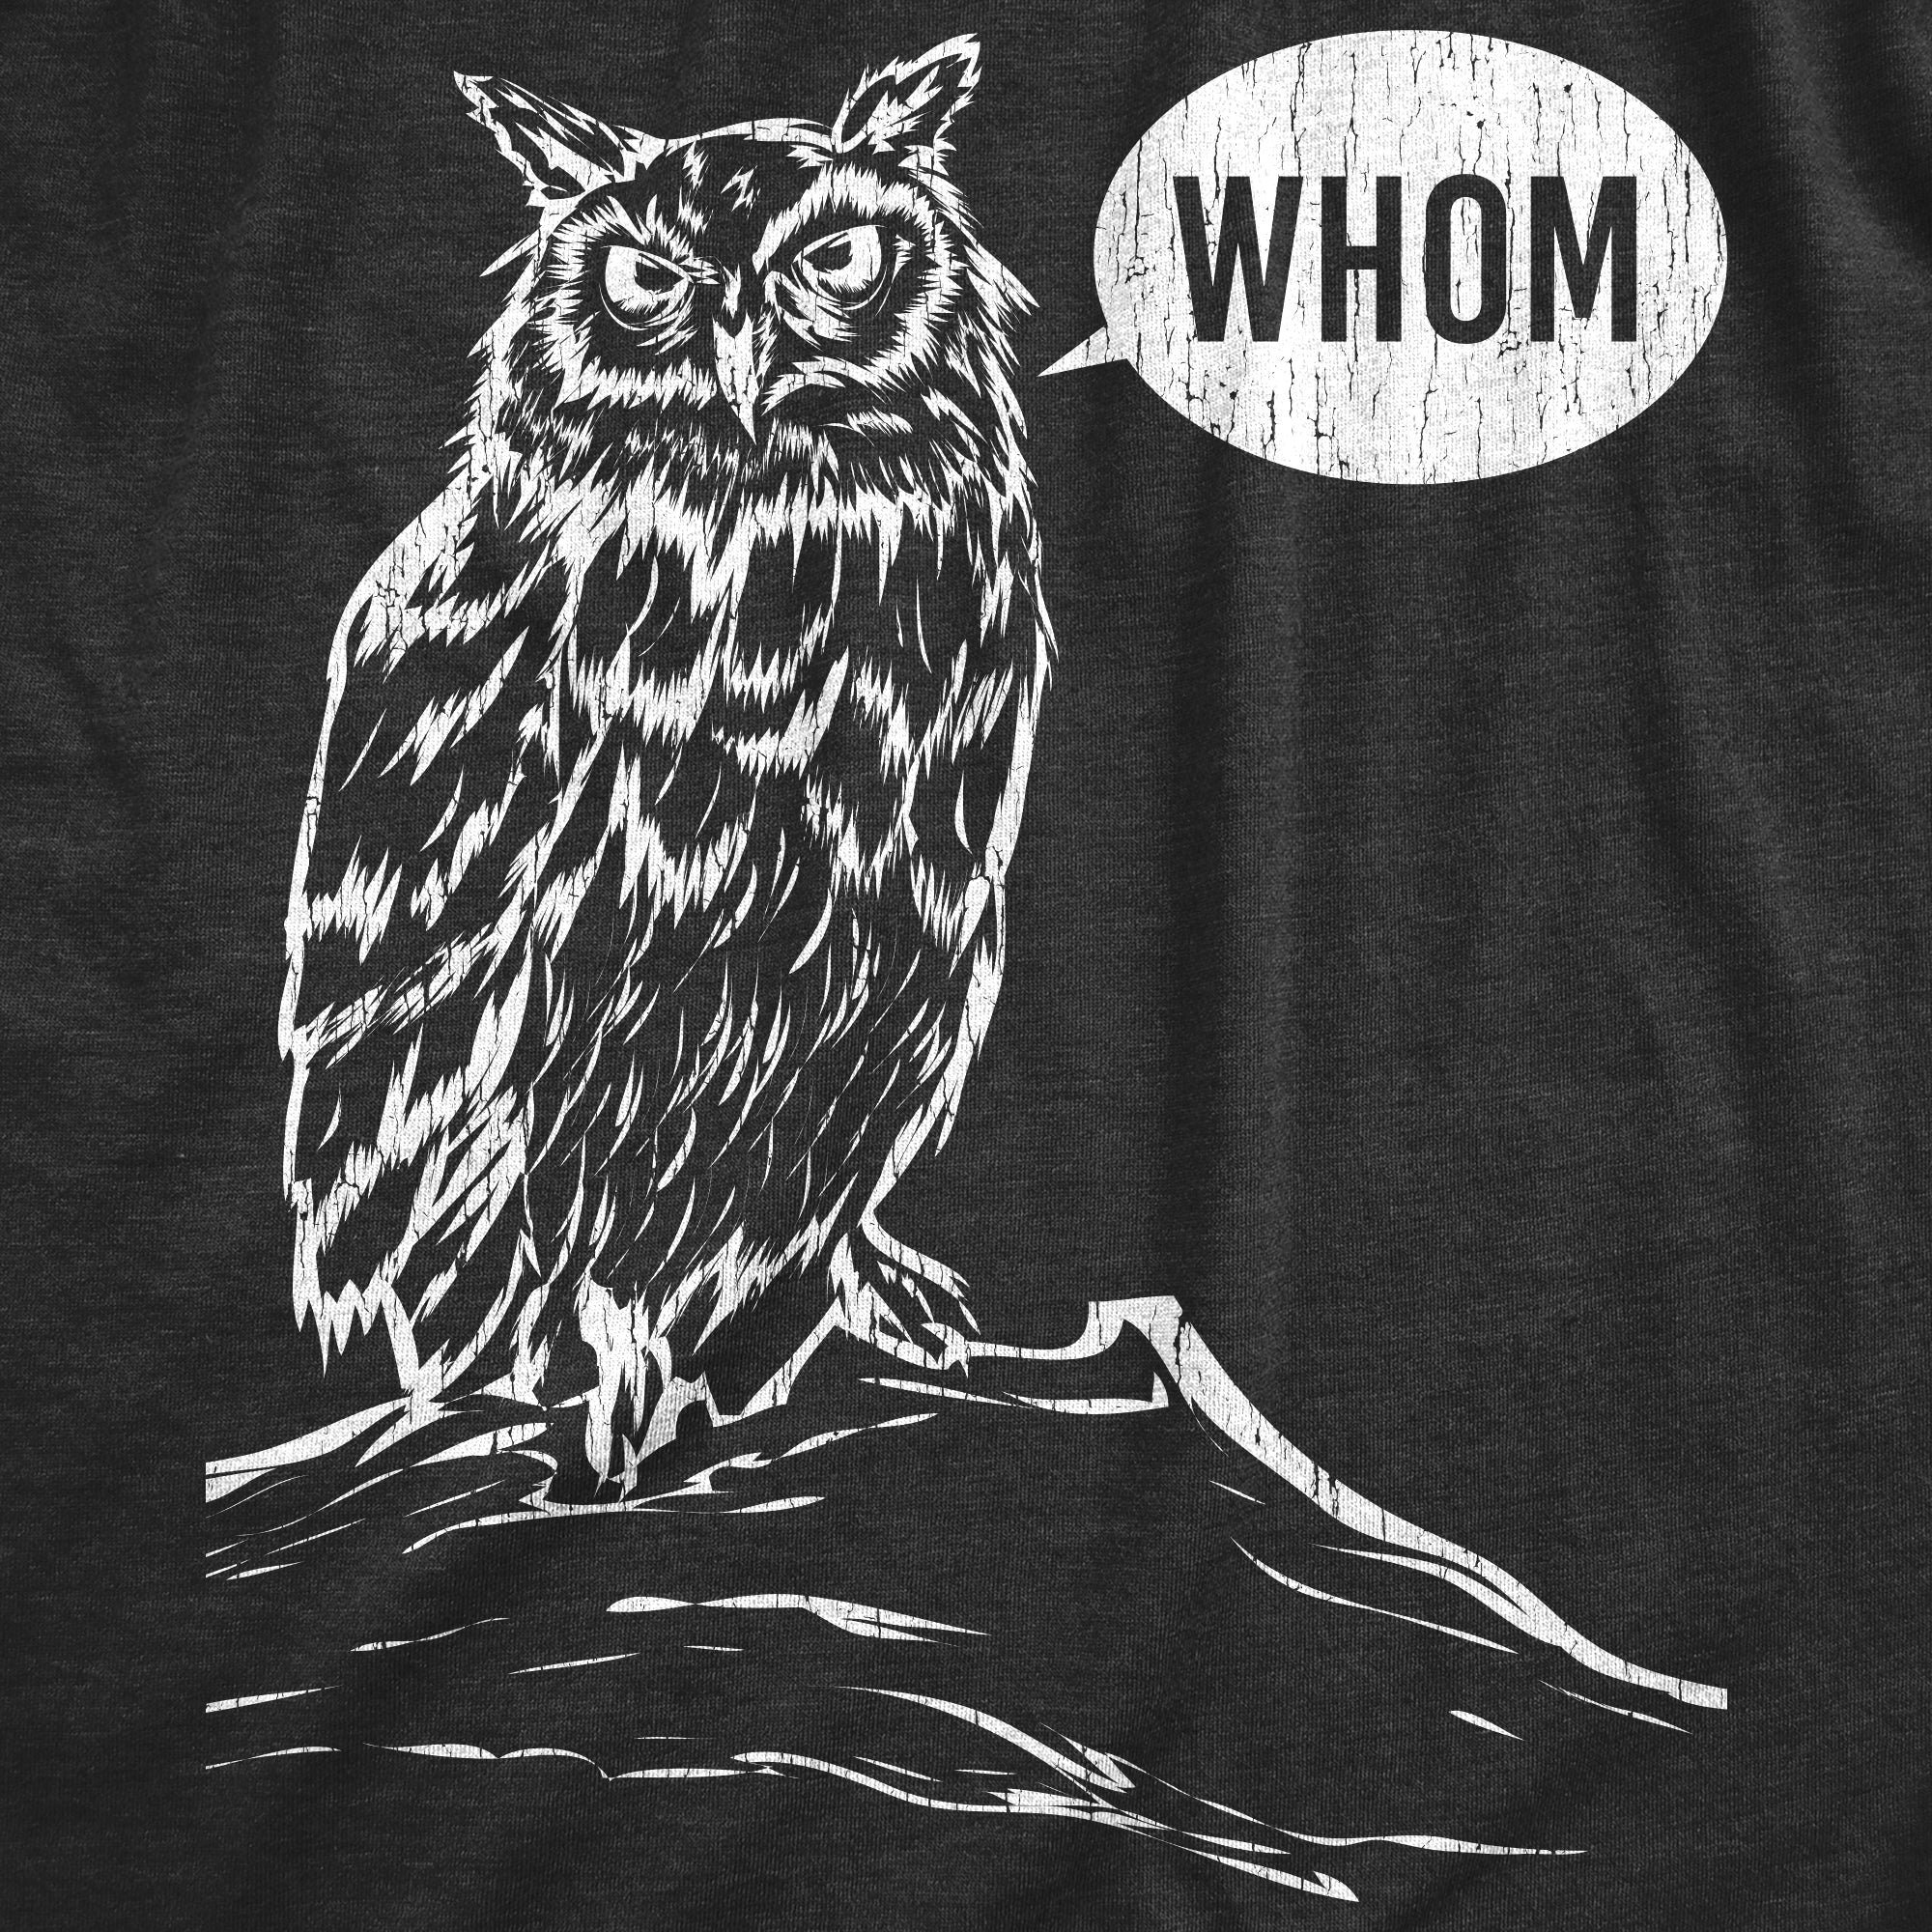 Funny Heather Black - Whom Owl Whom Womens T Shirt Nerdy Animal Nerdy Tee